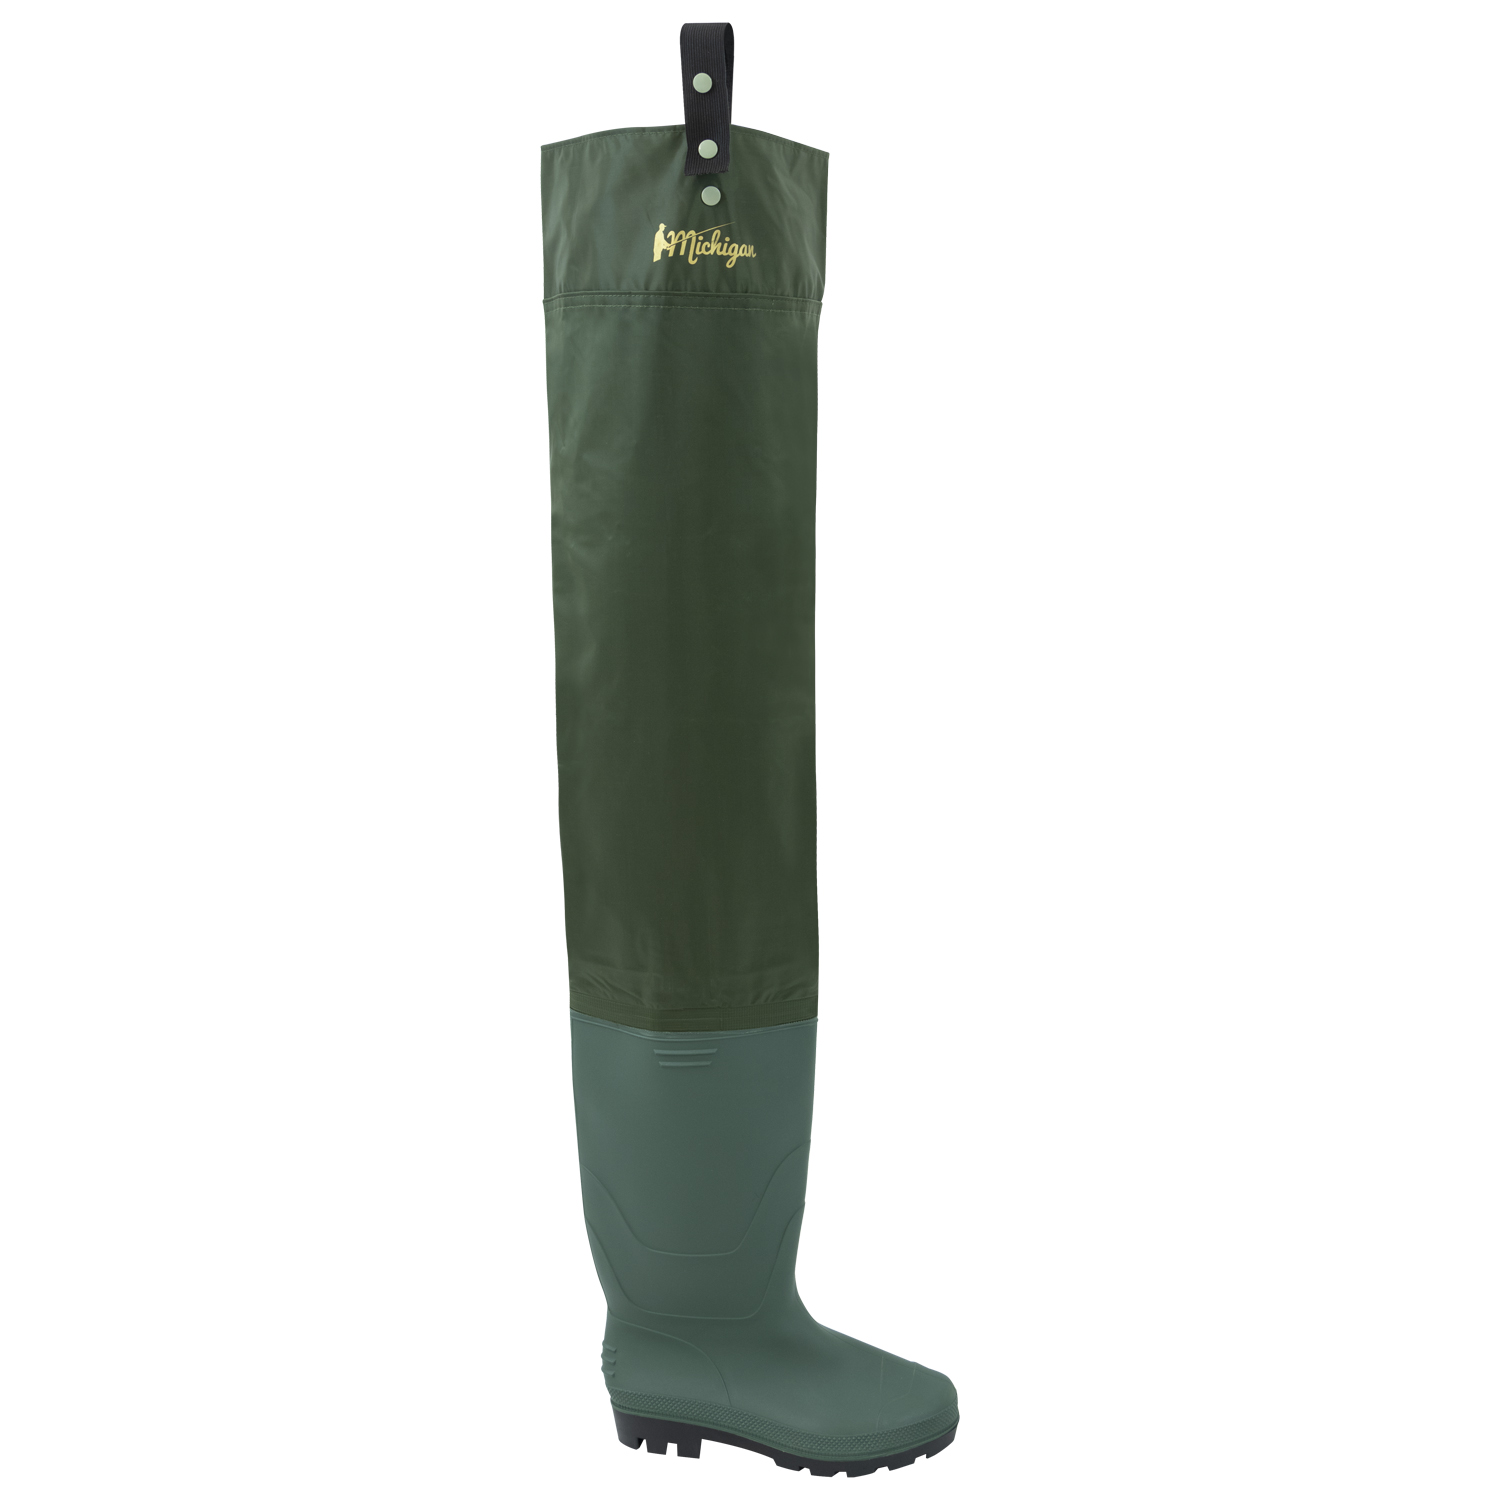 Shoe Sizes 6-12 Michigan 100/% Waterproof Camouflage Nylon Fishing Unisex Chest Waders Includes Belt